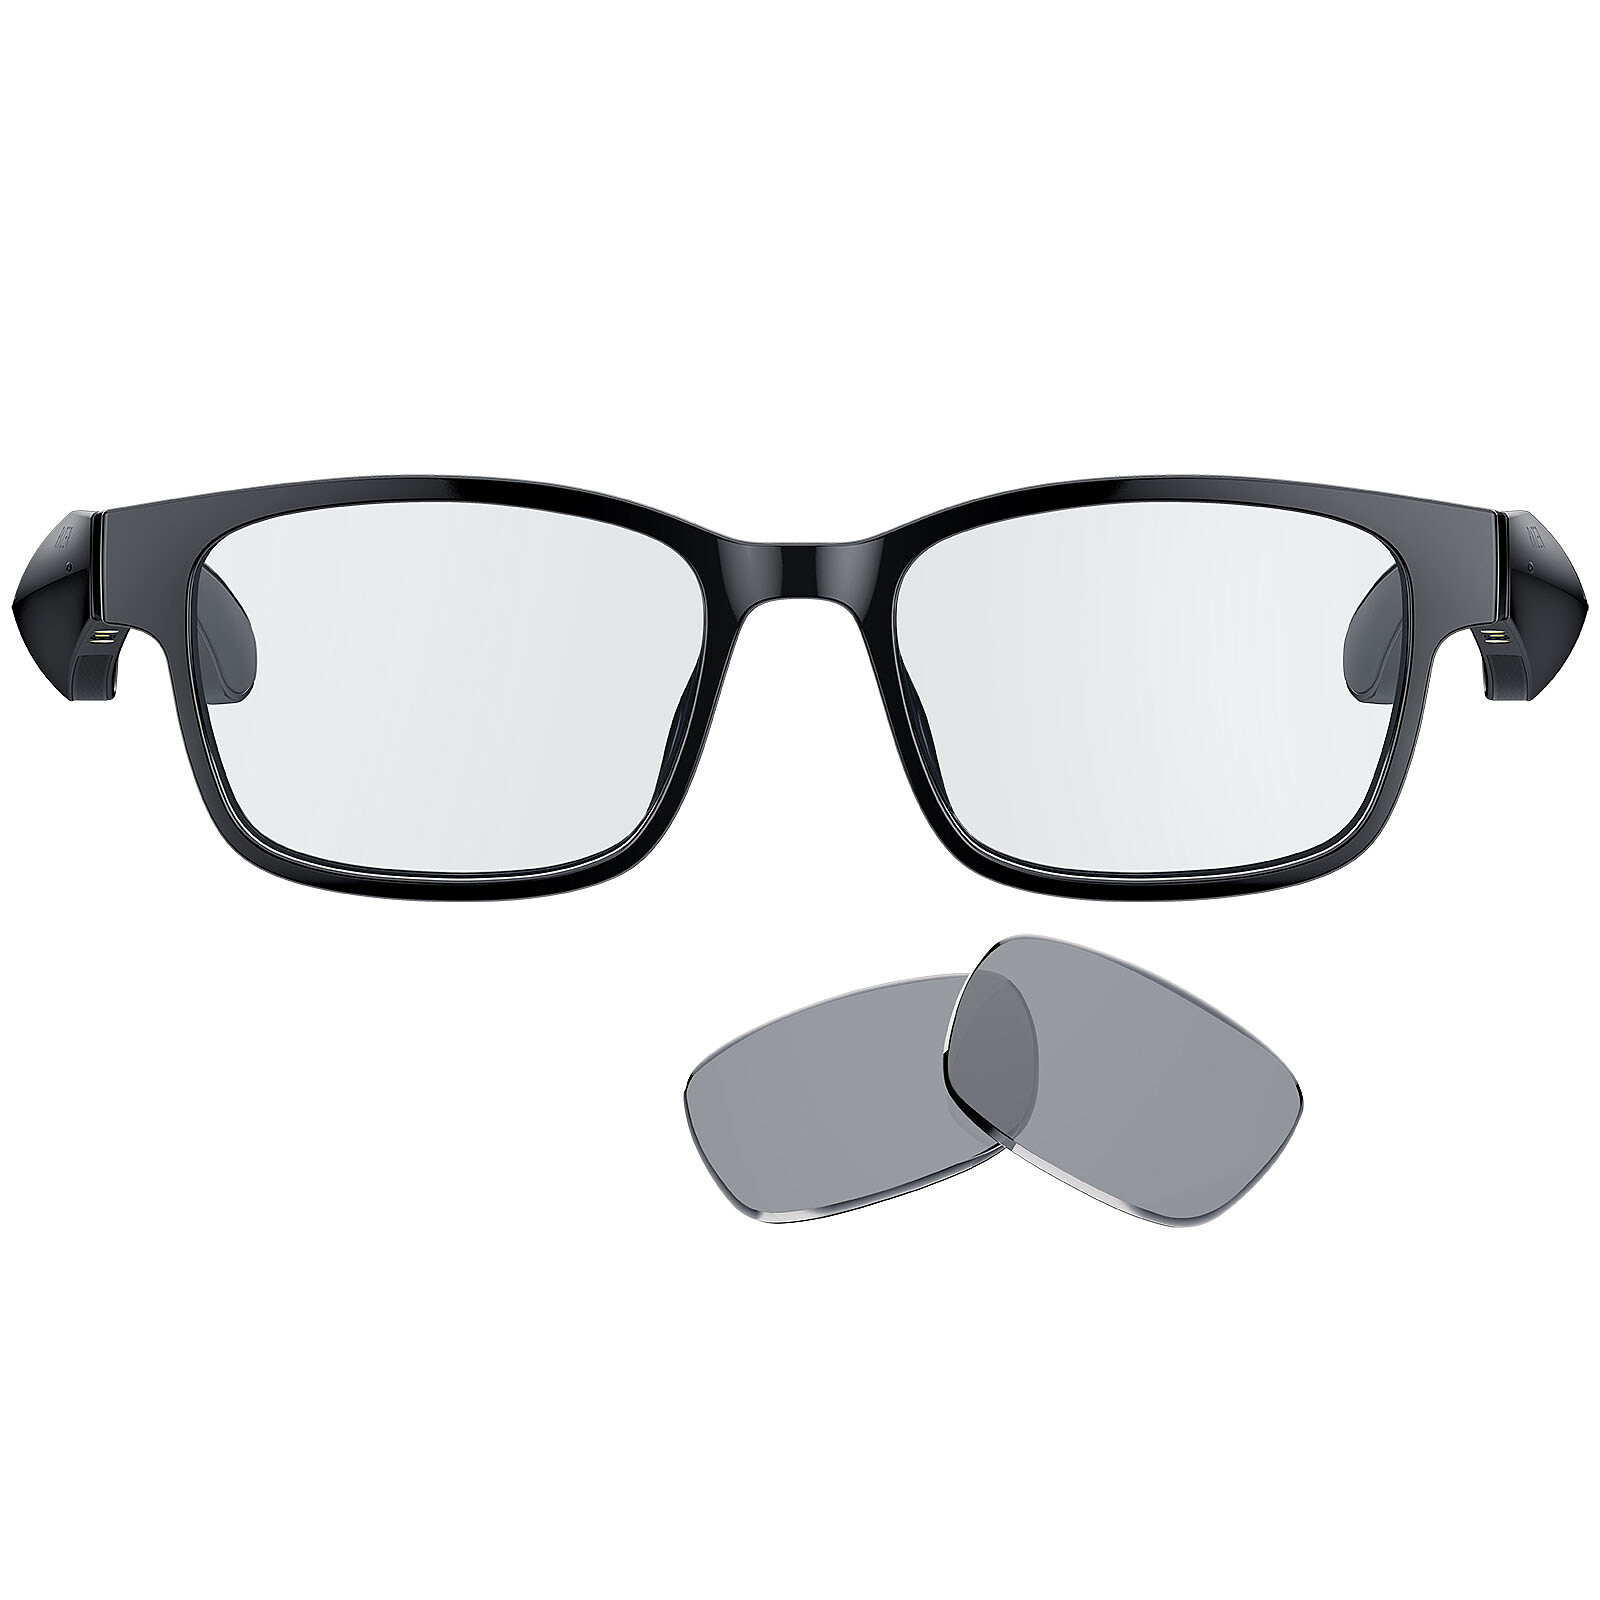 Gafas inteligentes Razer Anzu L (rectangulares) - Gafas de